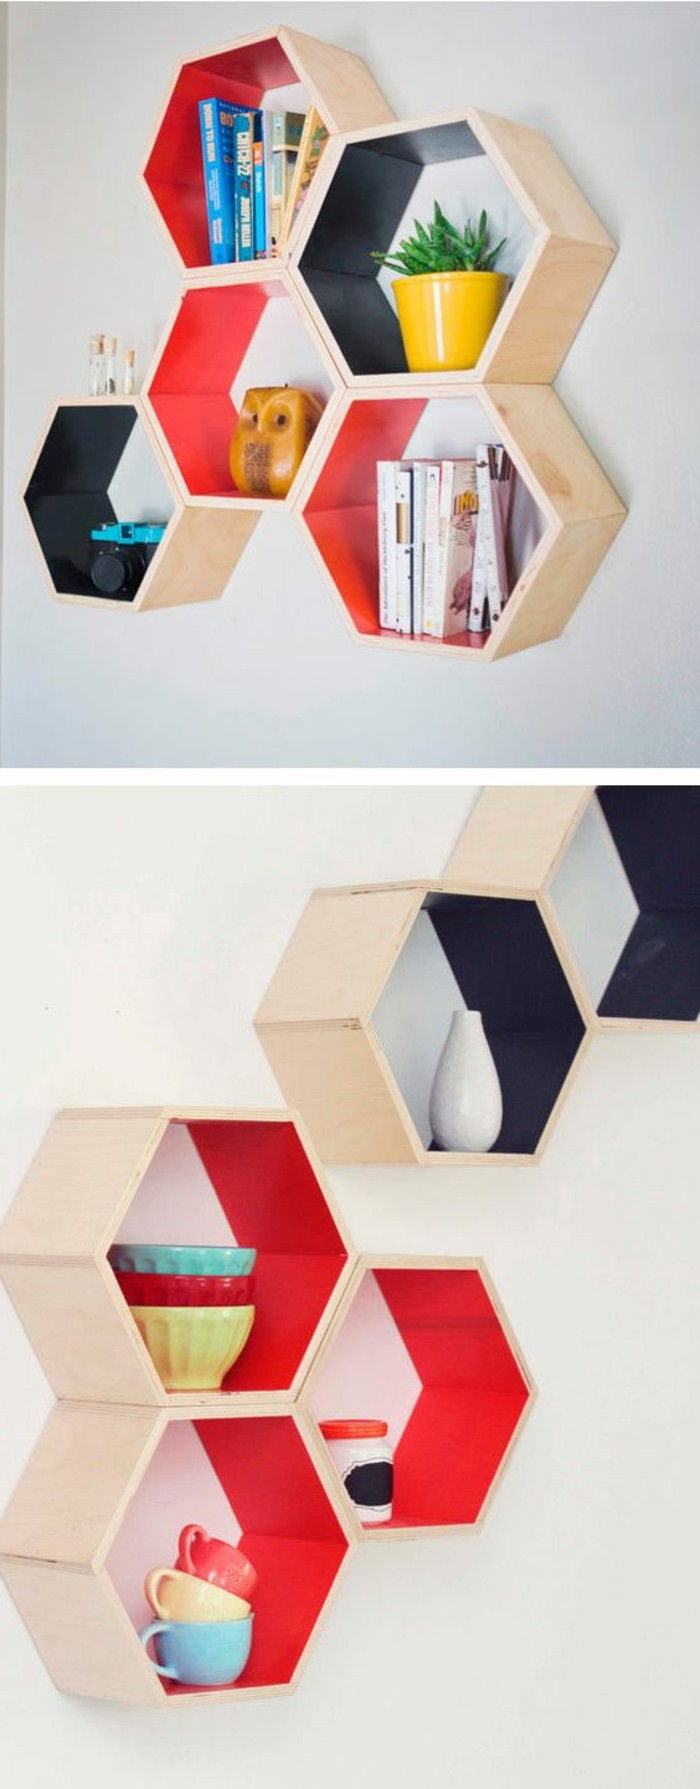 2-DIY Moebel-DIY wohnideen półkach-z drewna-in-czerwono-czarnej barwy